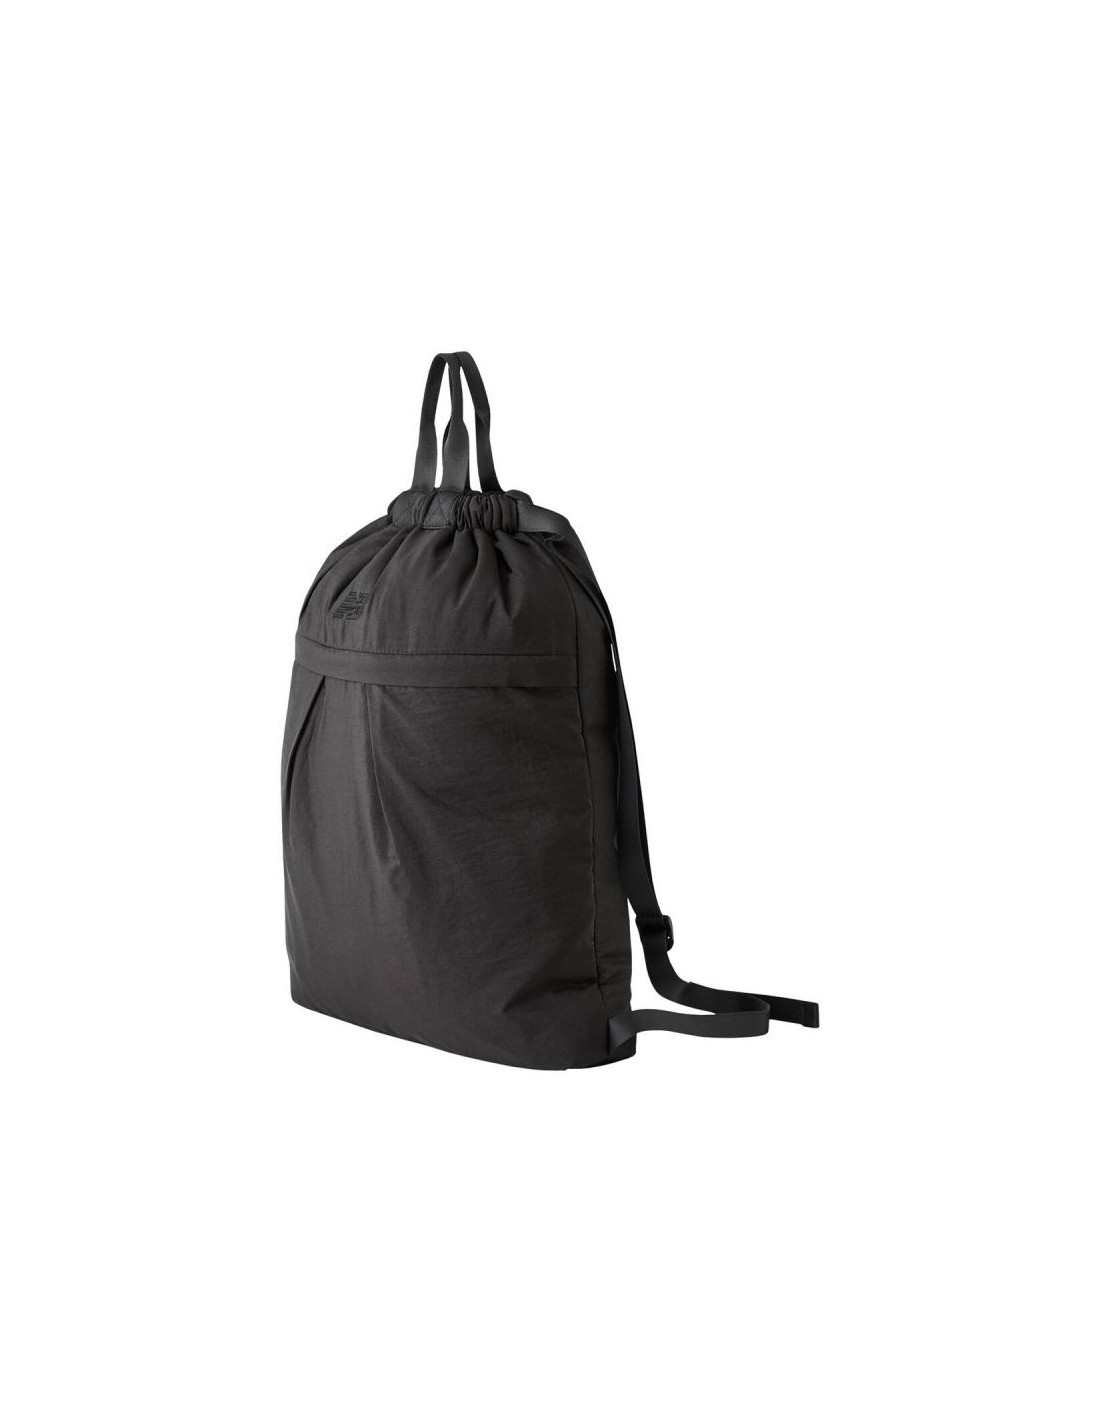 New Balance Tote BK LAB31007BK backpack